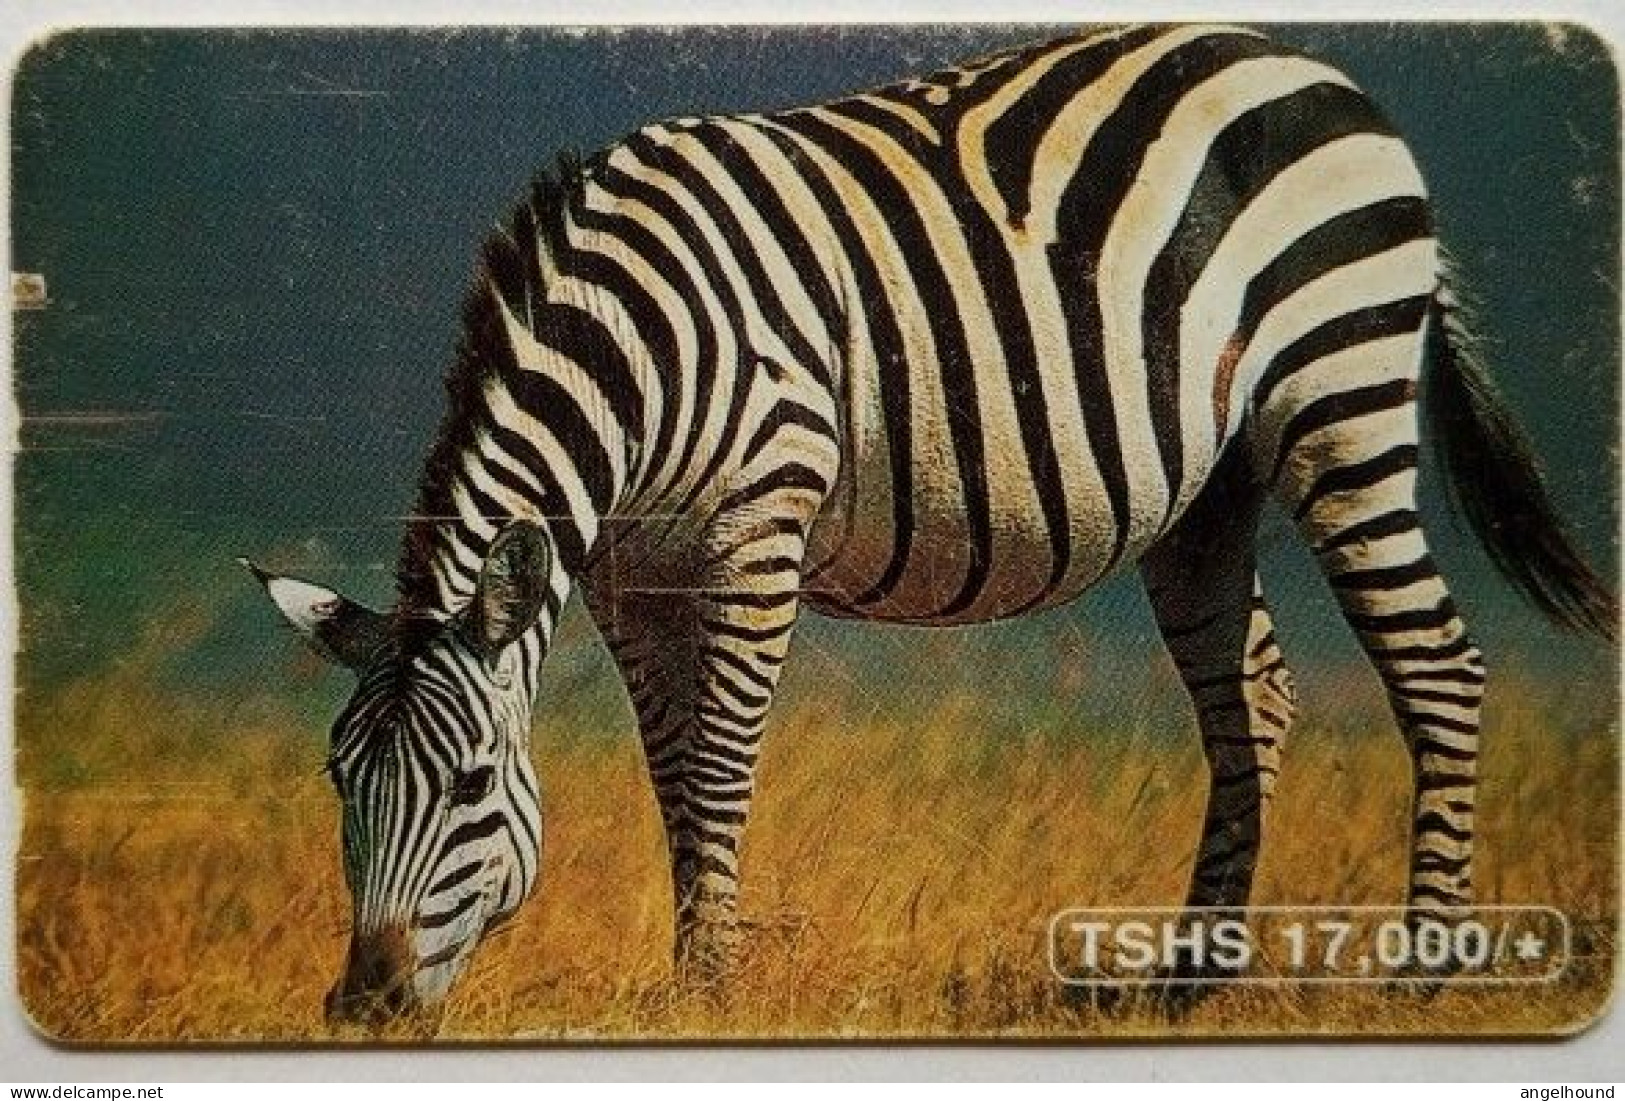 Tanzania 17,000 Shillings " Zebra " - Tansania